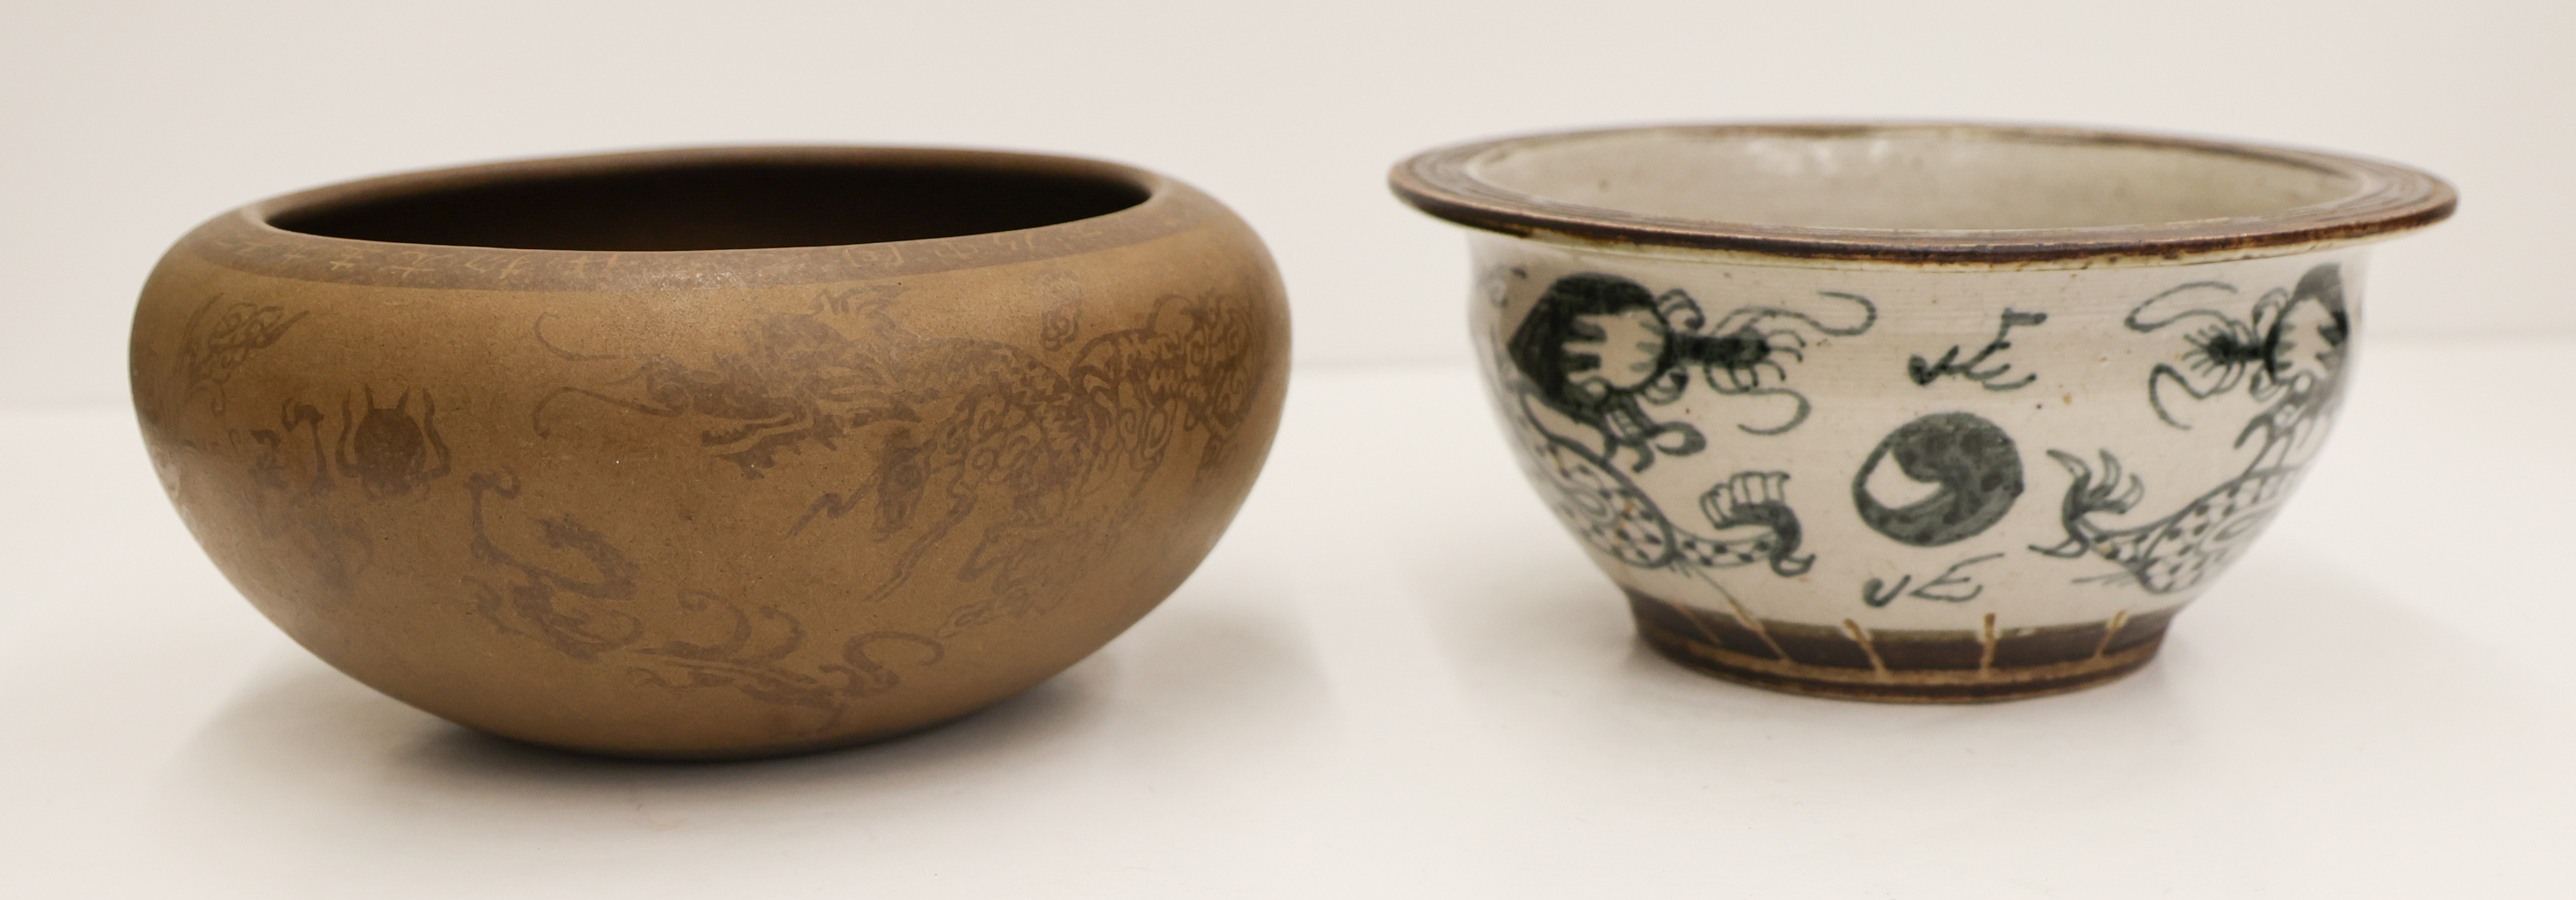 2pc Chinese Ceramic Censer Bowls 3afe9e